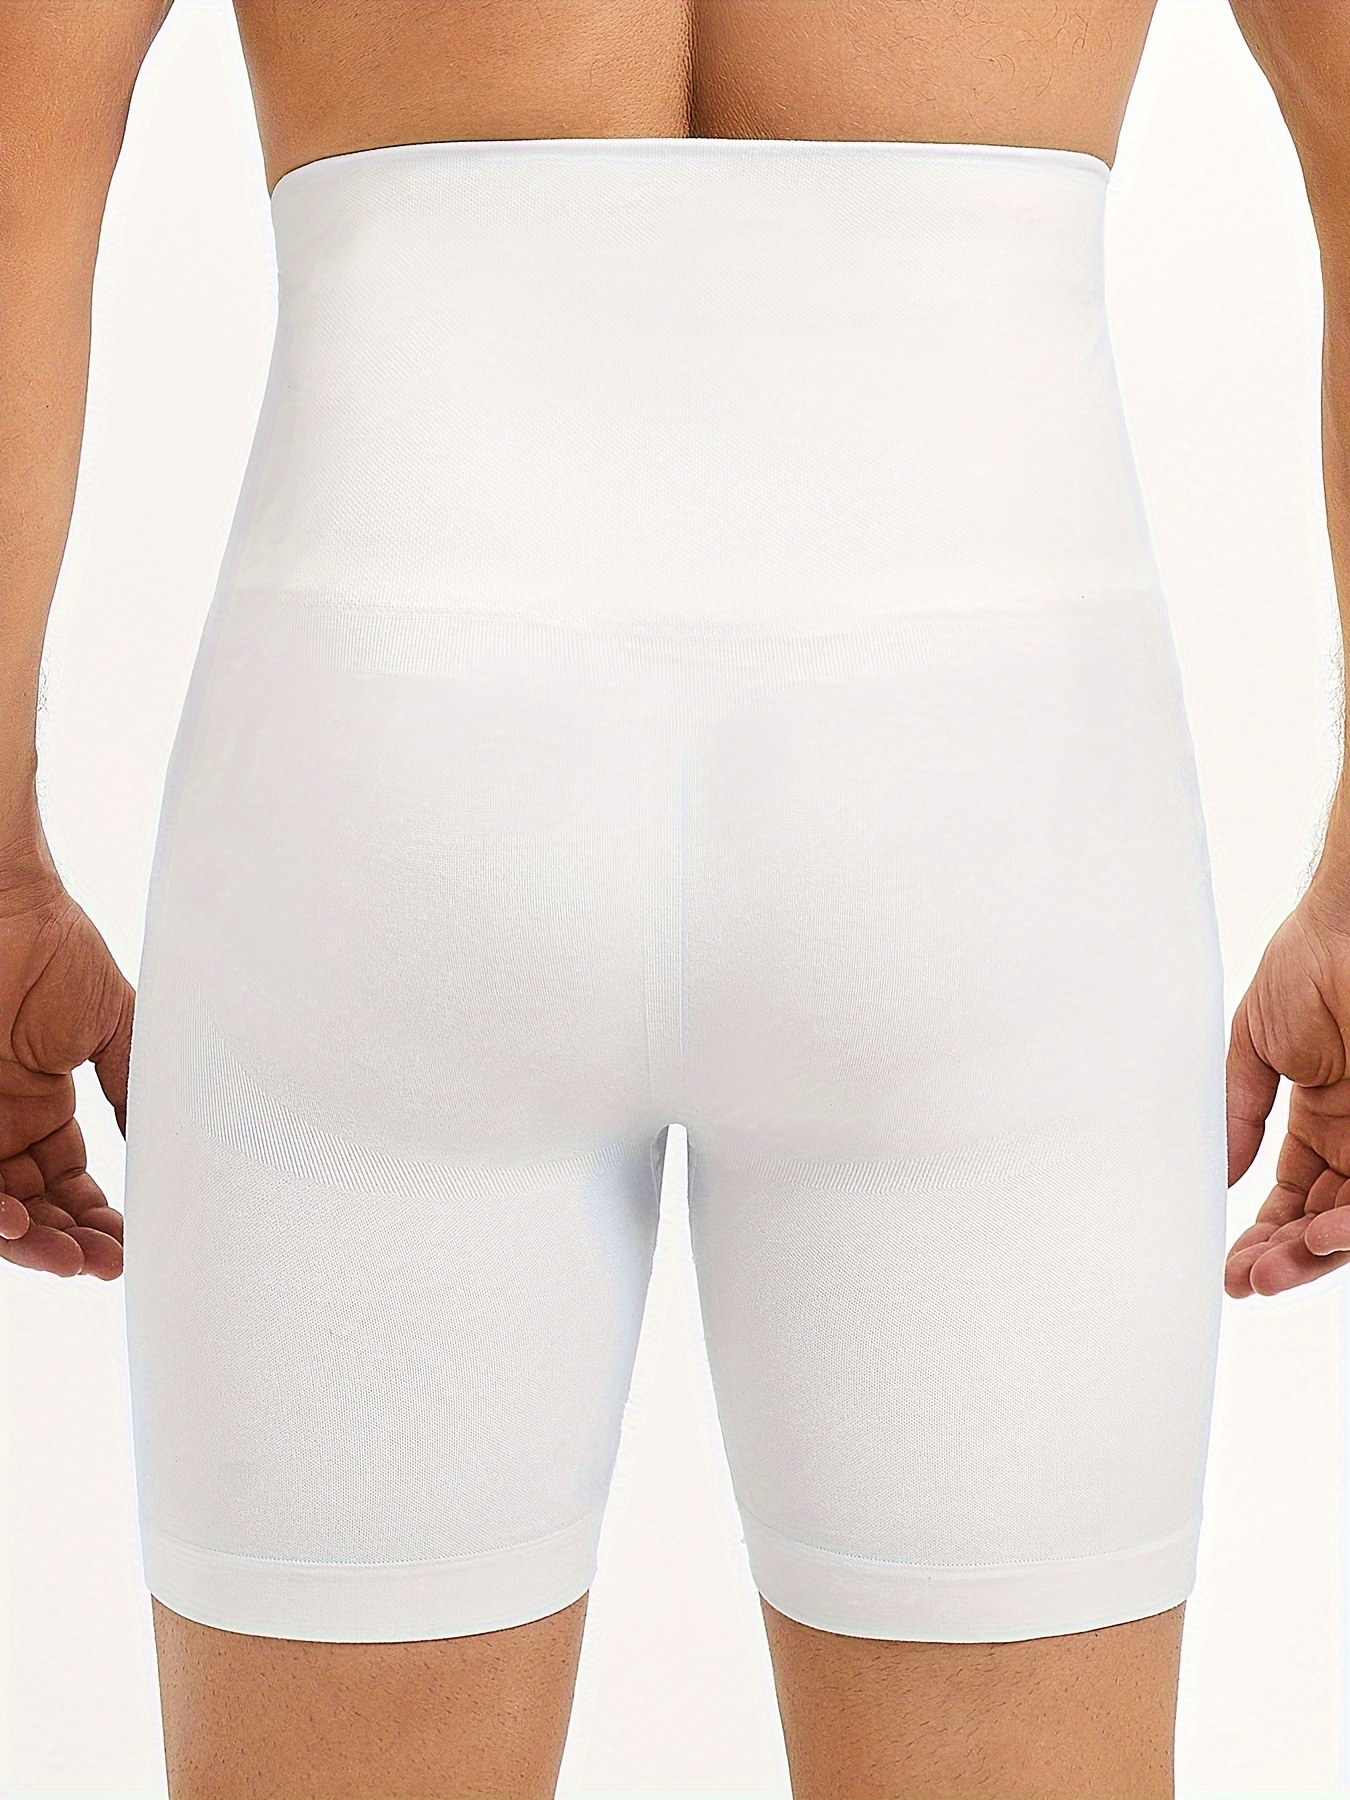 Men Underwear Waist Slimming Trainer Corset Underpants Body Shaper for  Shapewear, White, M